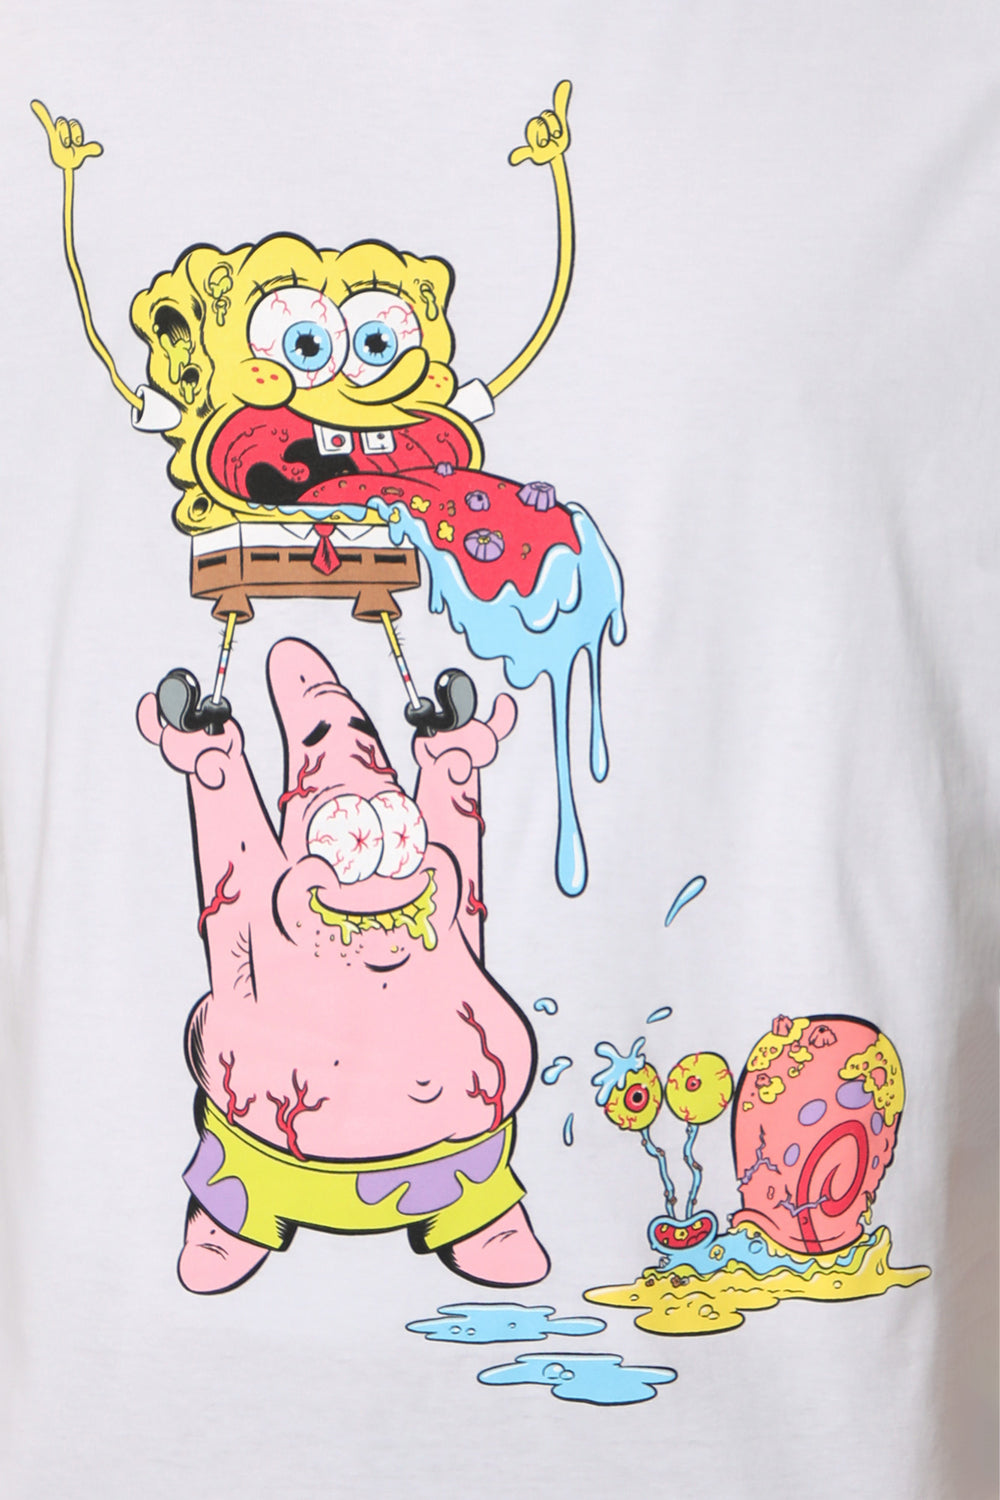 Mens SpongeBob & Patrick T-Shirt Mens SpongeBob & Patrick T-Shirt